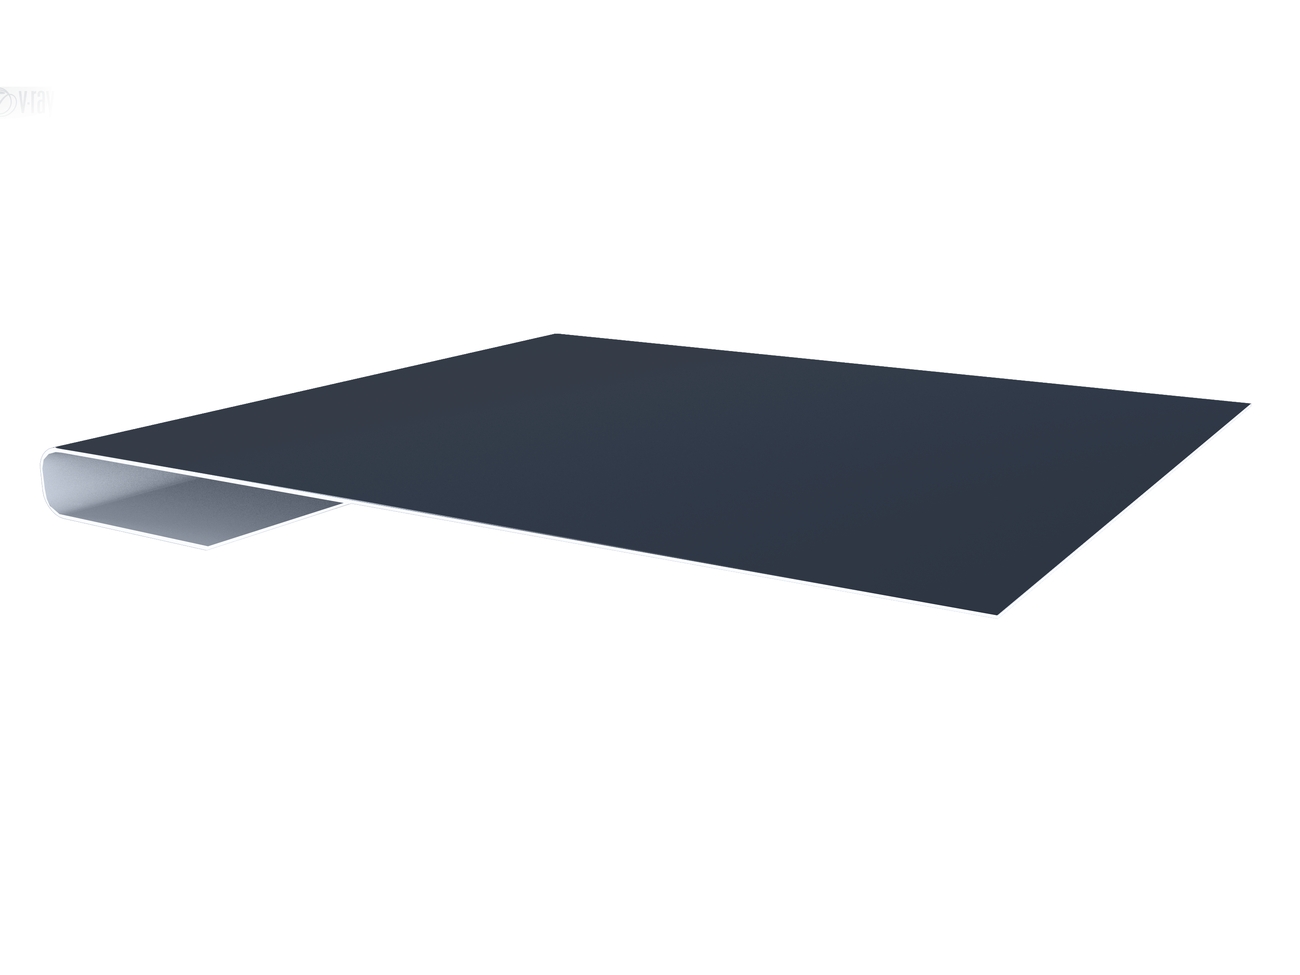 Планка завершающая простая 65мм GreenCoat Pural Matt RR 23 темно-серый (RAL 7024 мокрый асфальт)